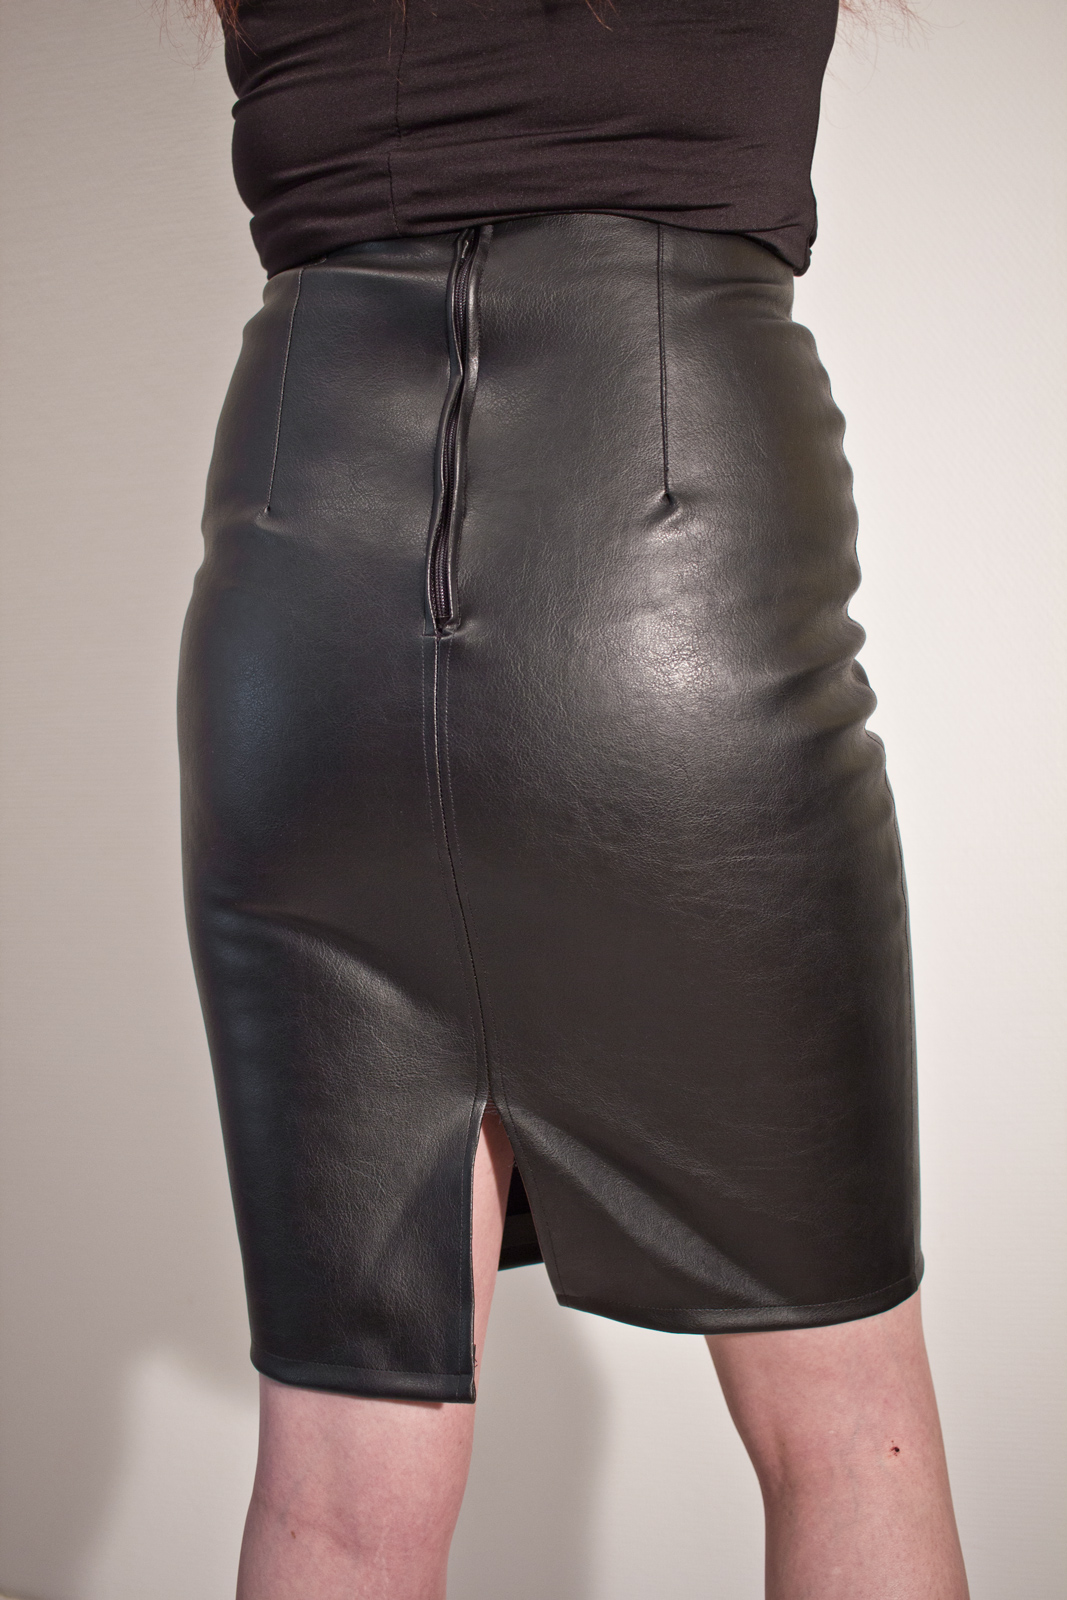 PlasticDreams: PU Leather pencil skirt